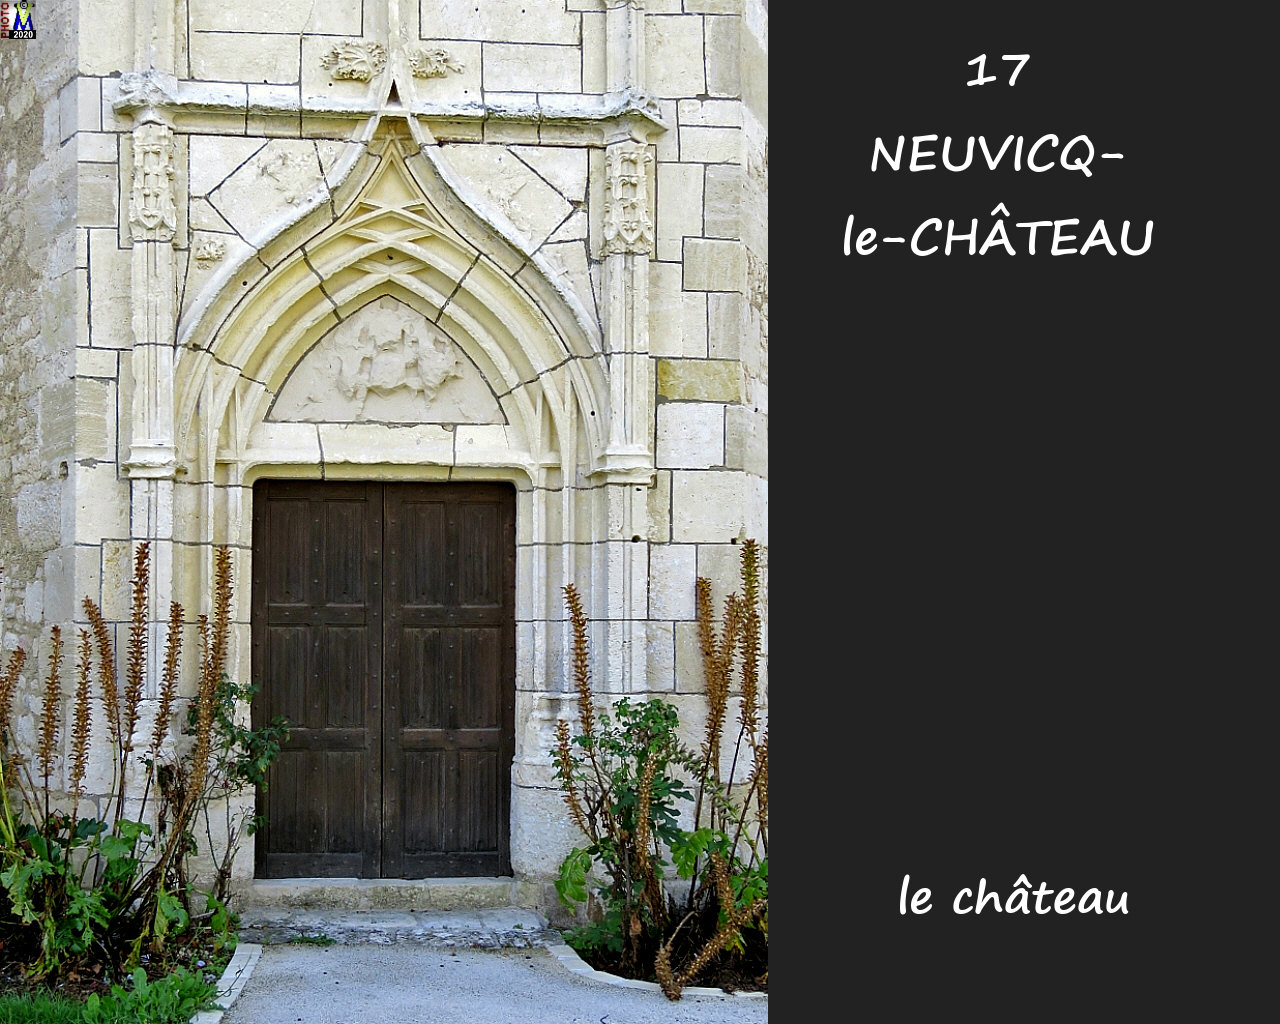 17NEUVICQ-CHATEAU_chateau_1032.jpg